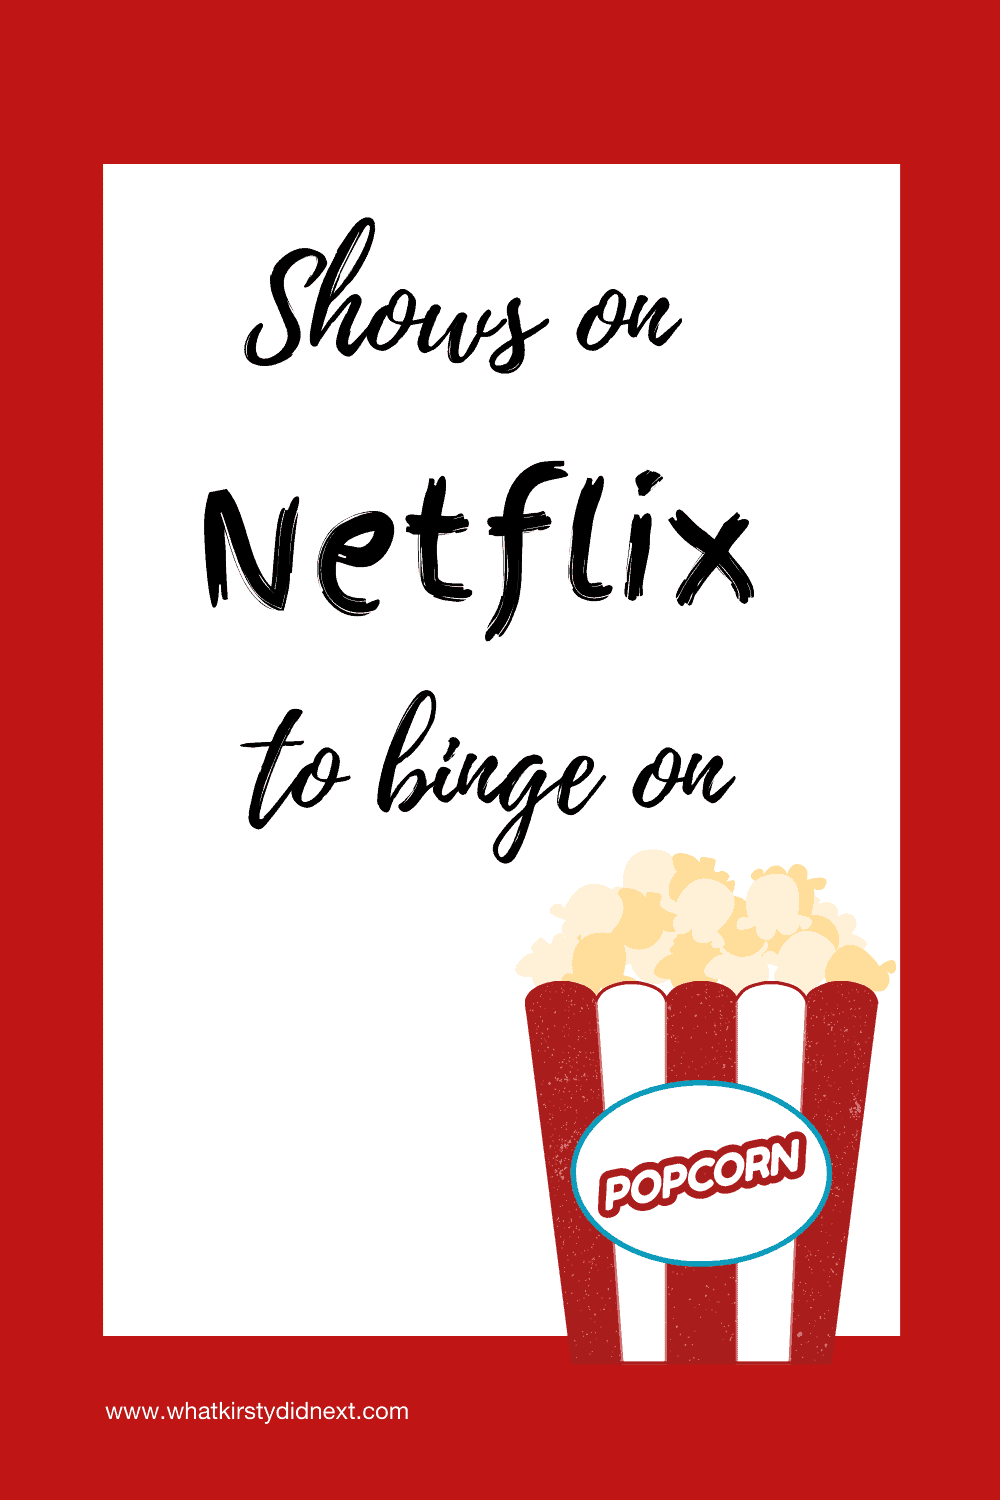 Shows on Netflix to binge on